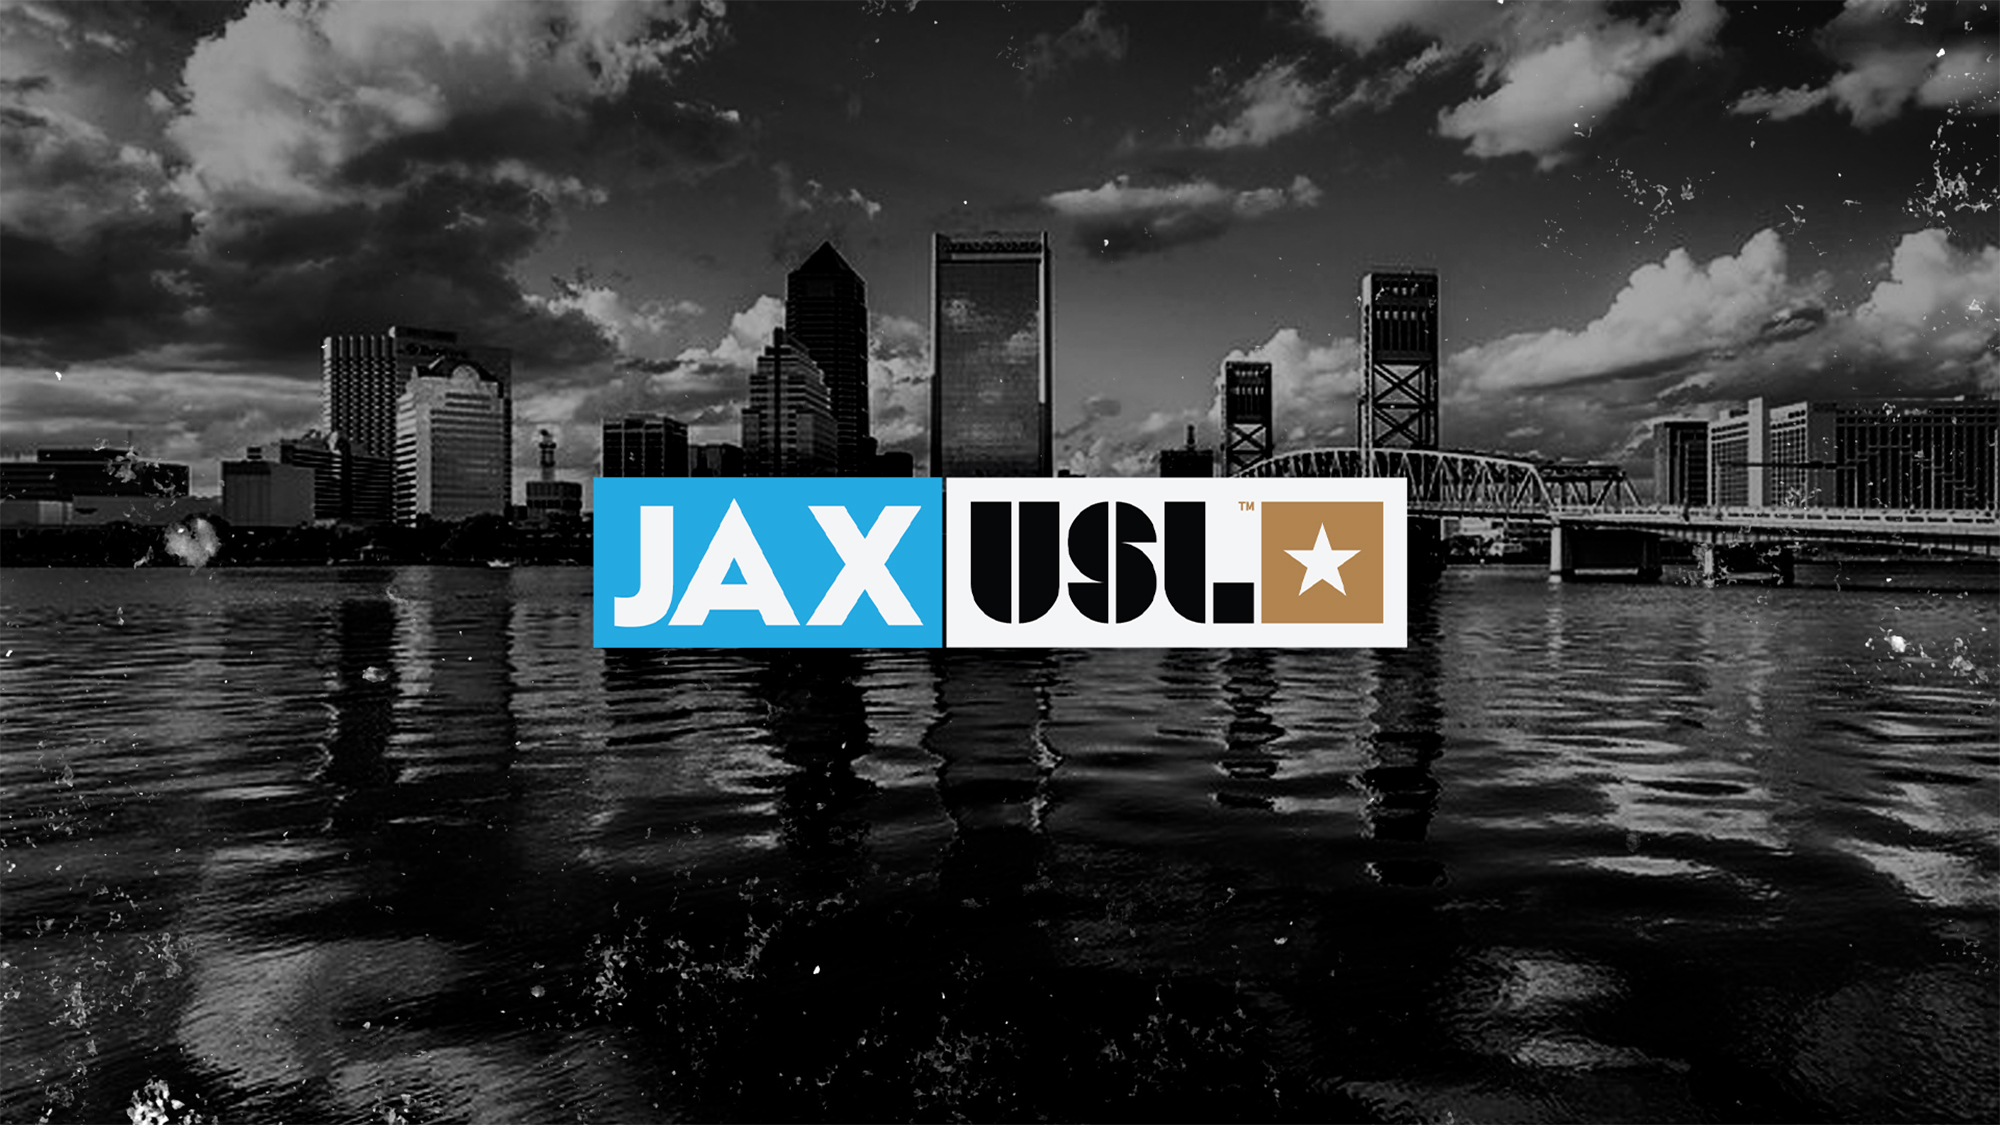 The logo for the new United Soccer League franchise in Jacksonville.